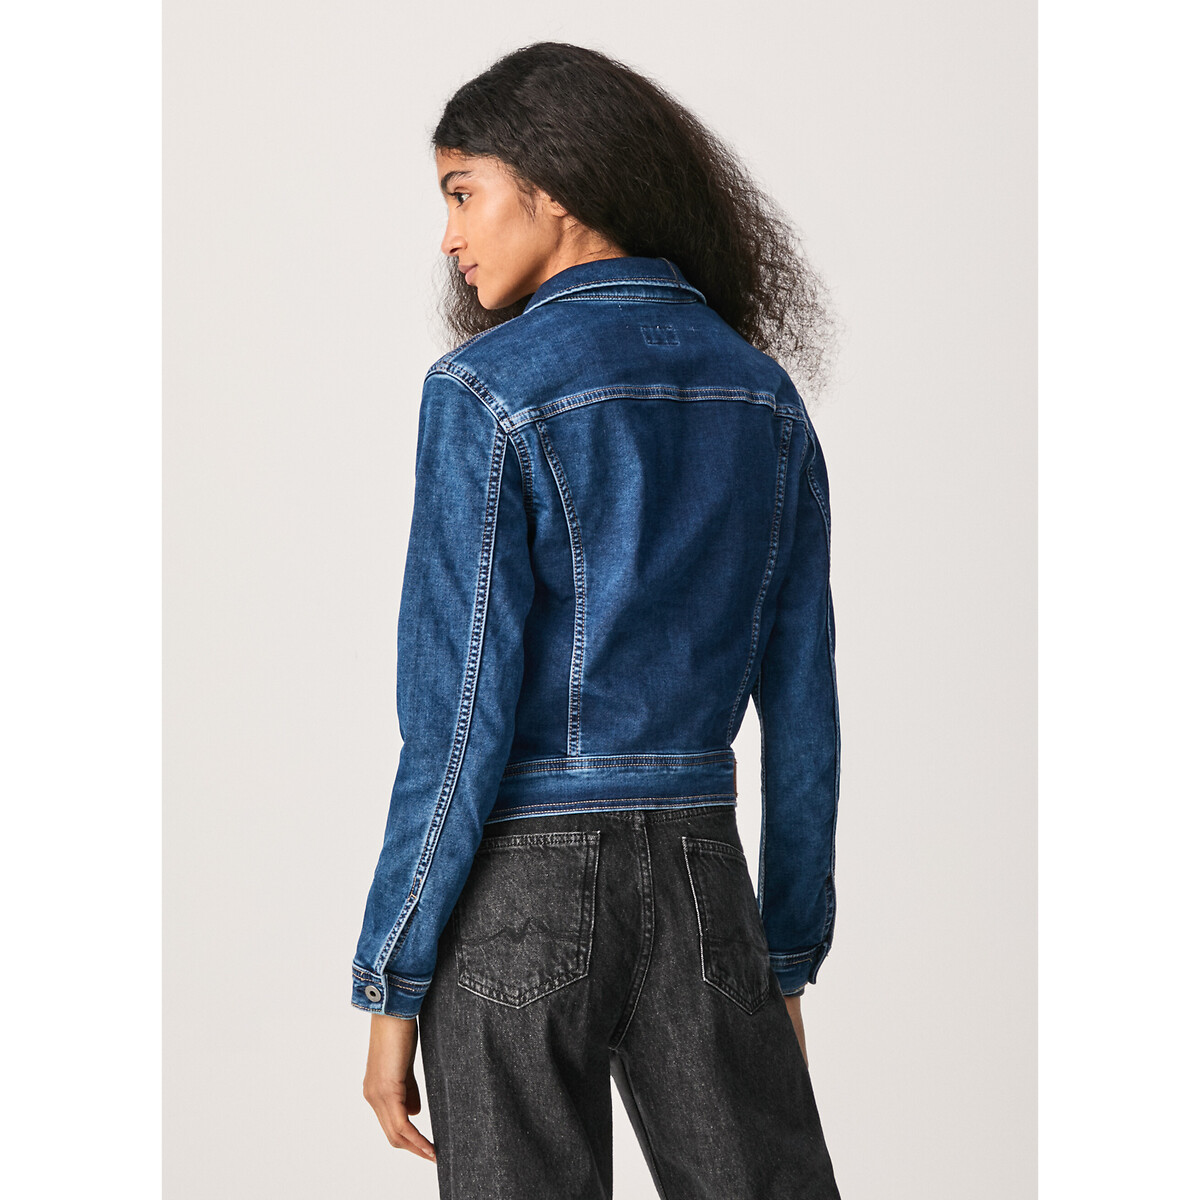 Жакет Короткий из джинсовой ткани L синий LaRedoute, размер L - фото 2